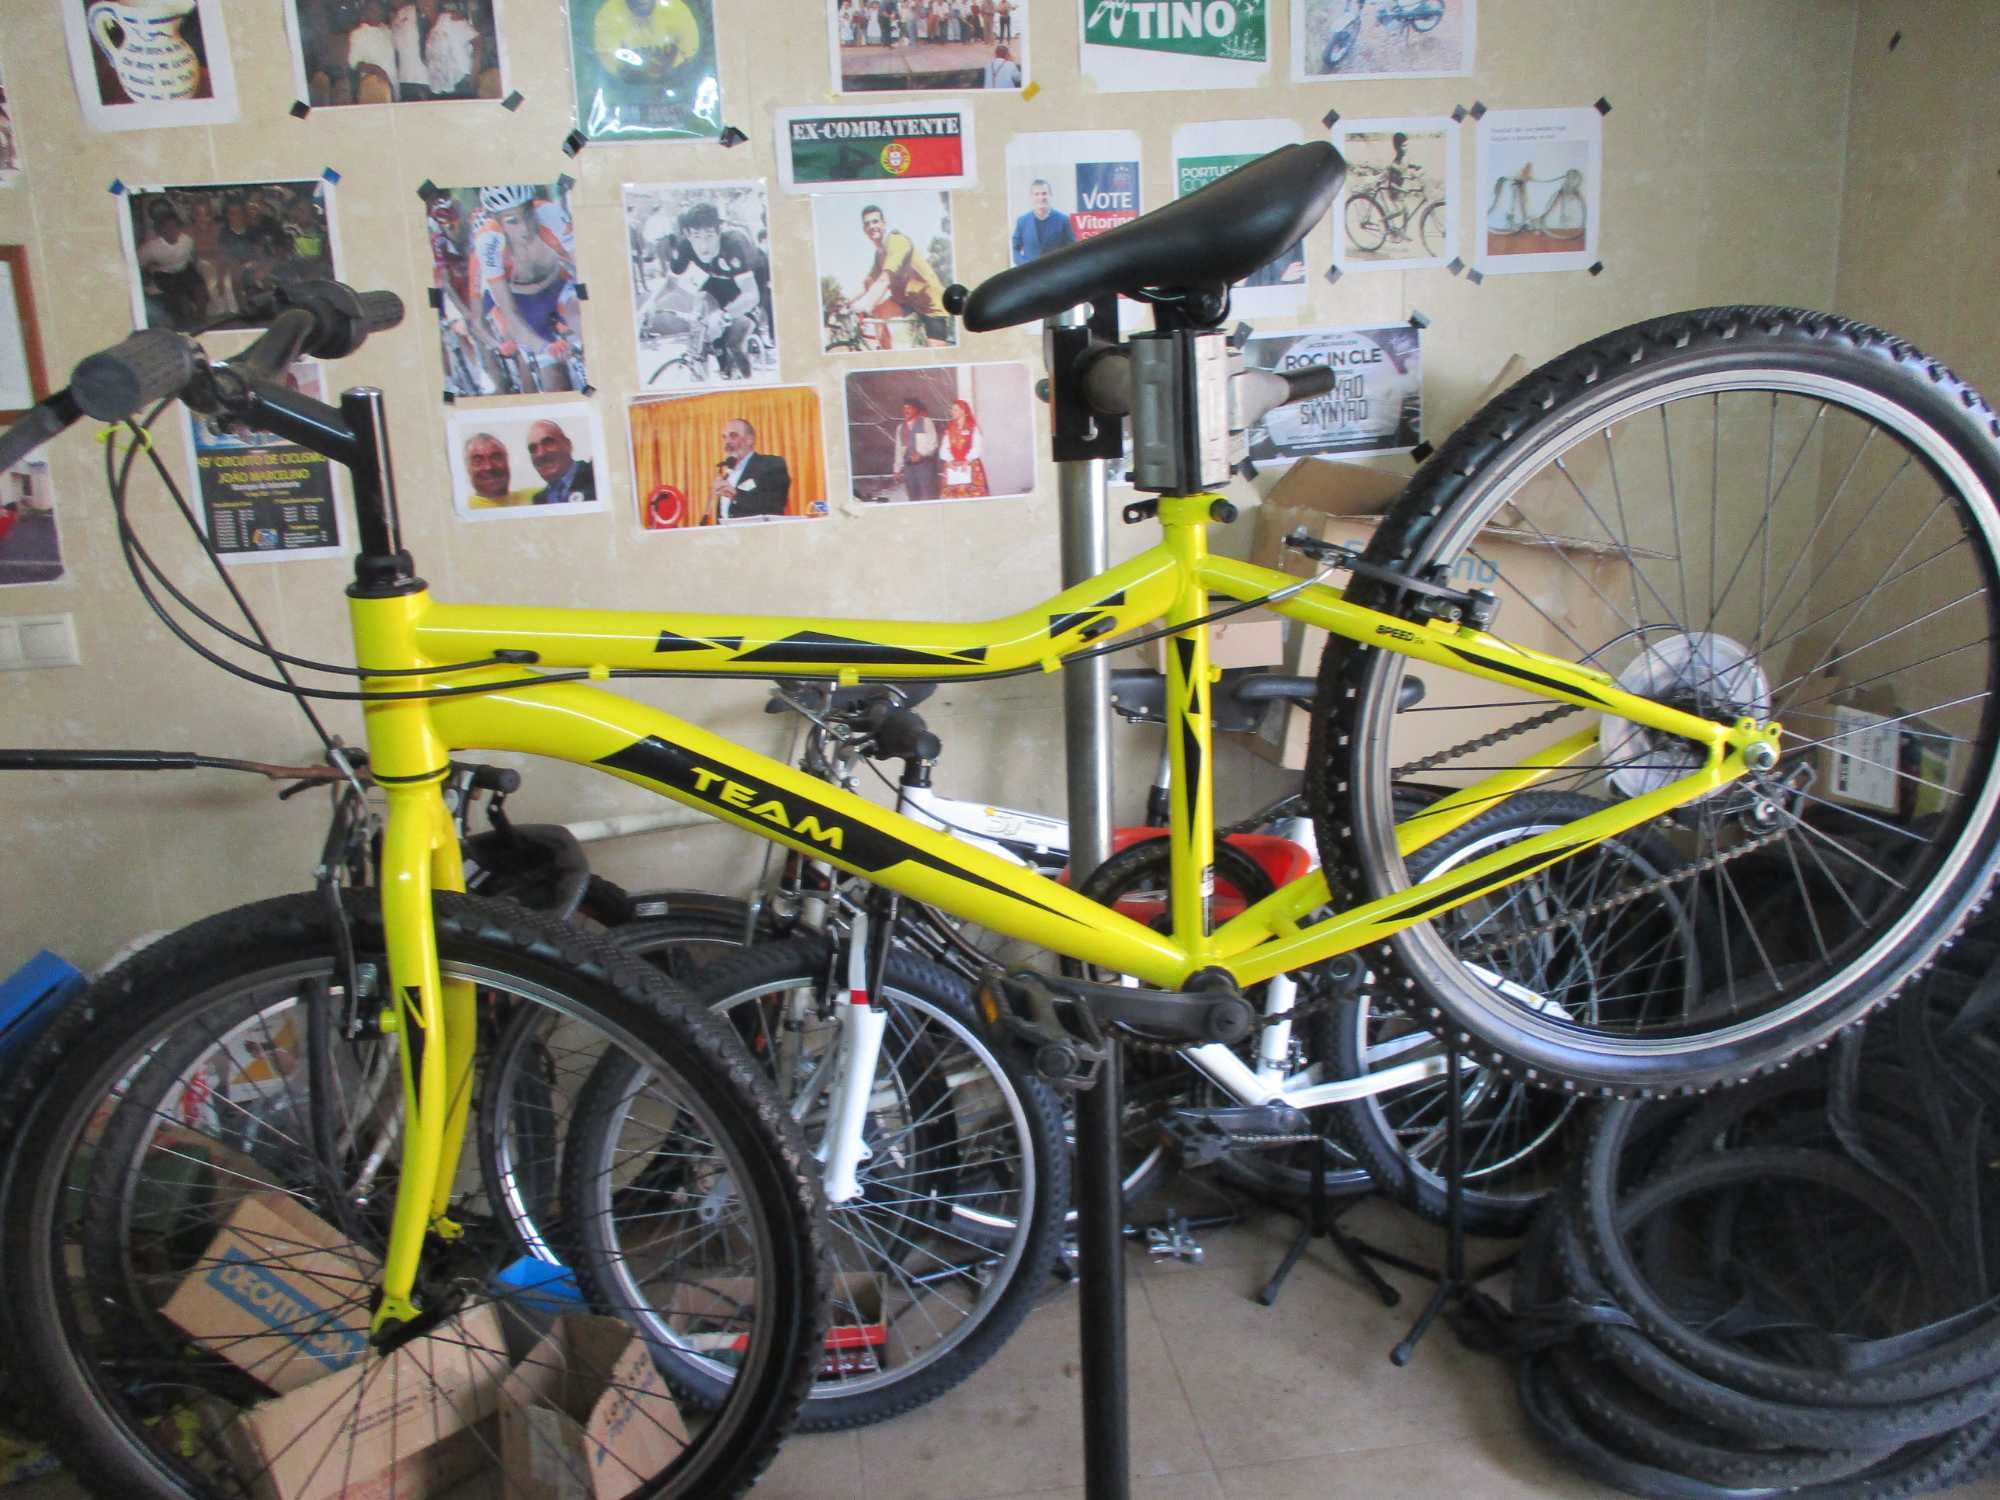 Bicicleta TEAM amarela roda 24, c/ 6 speeds